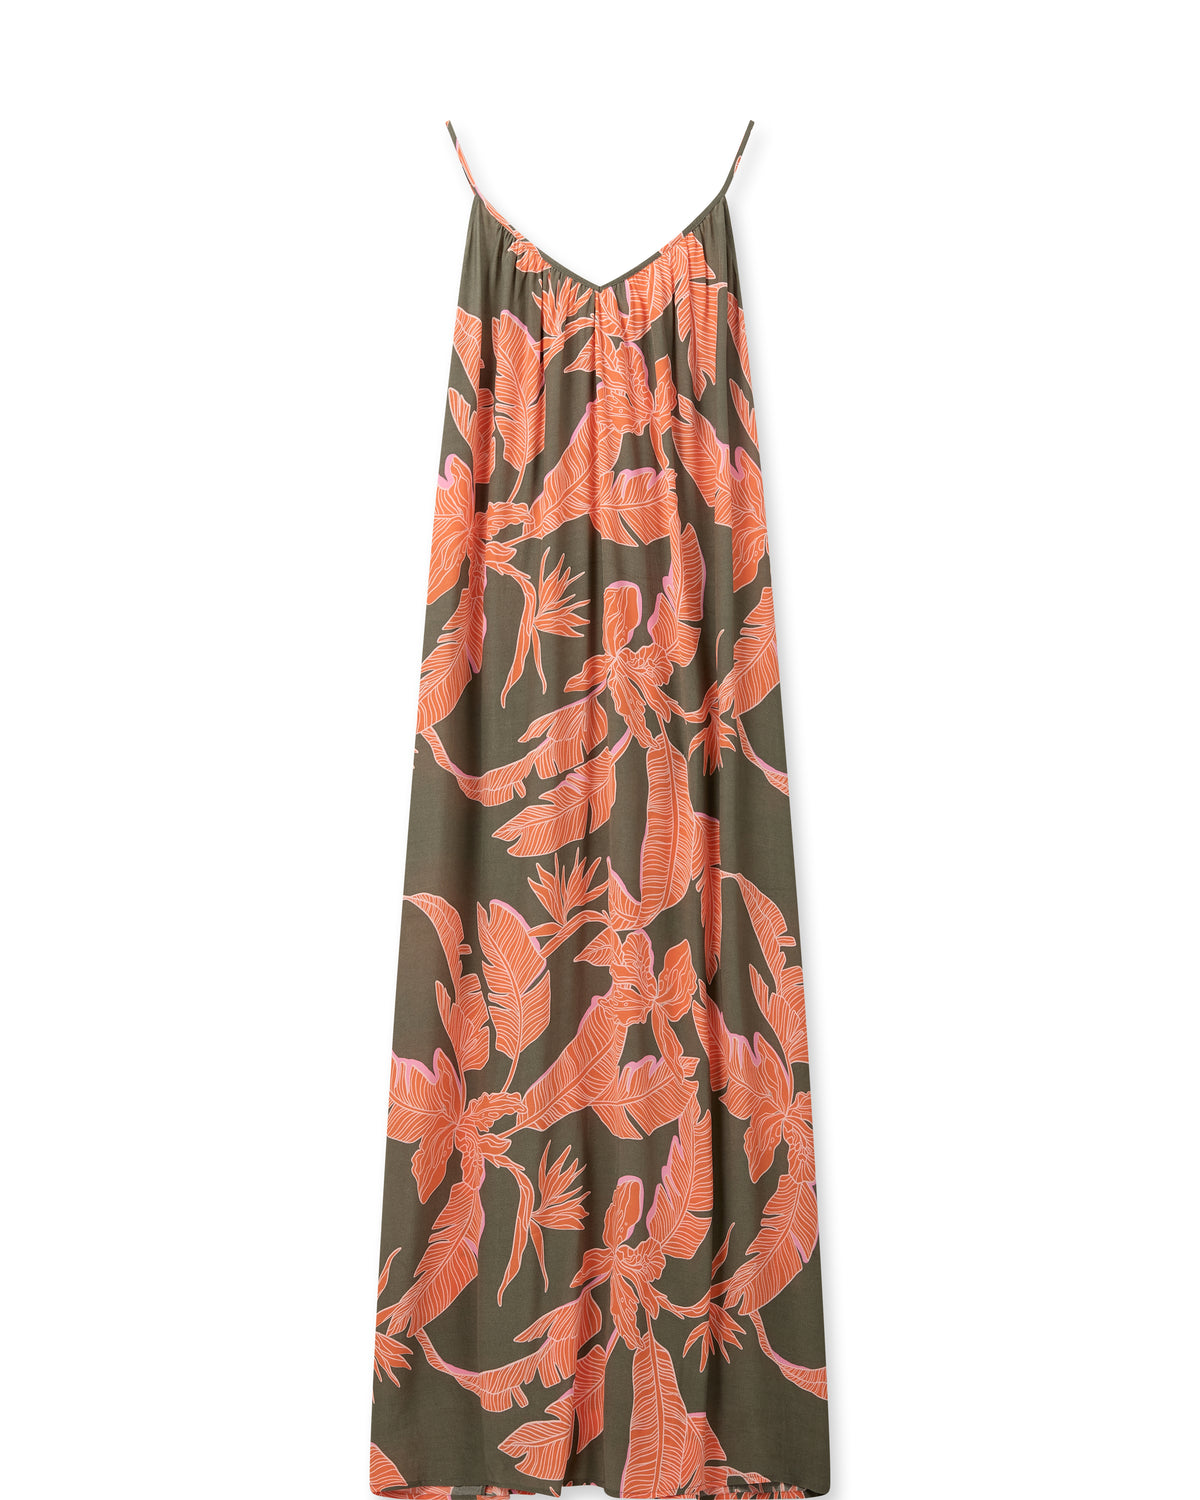 Khaki V neck summer dress with orange and pink palm tree leaf print